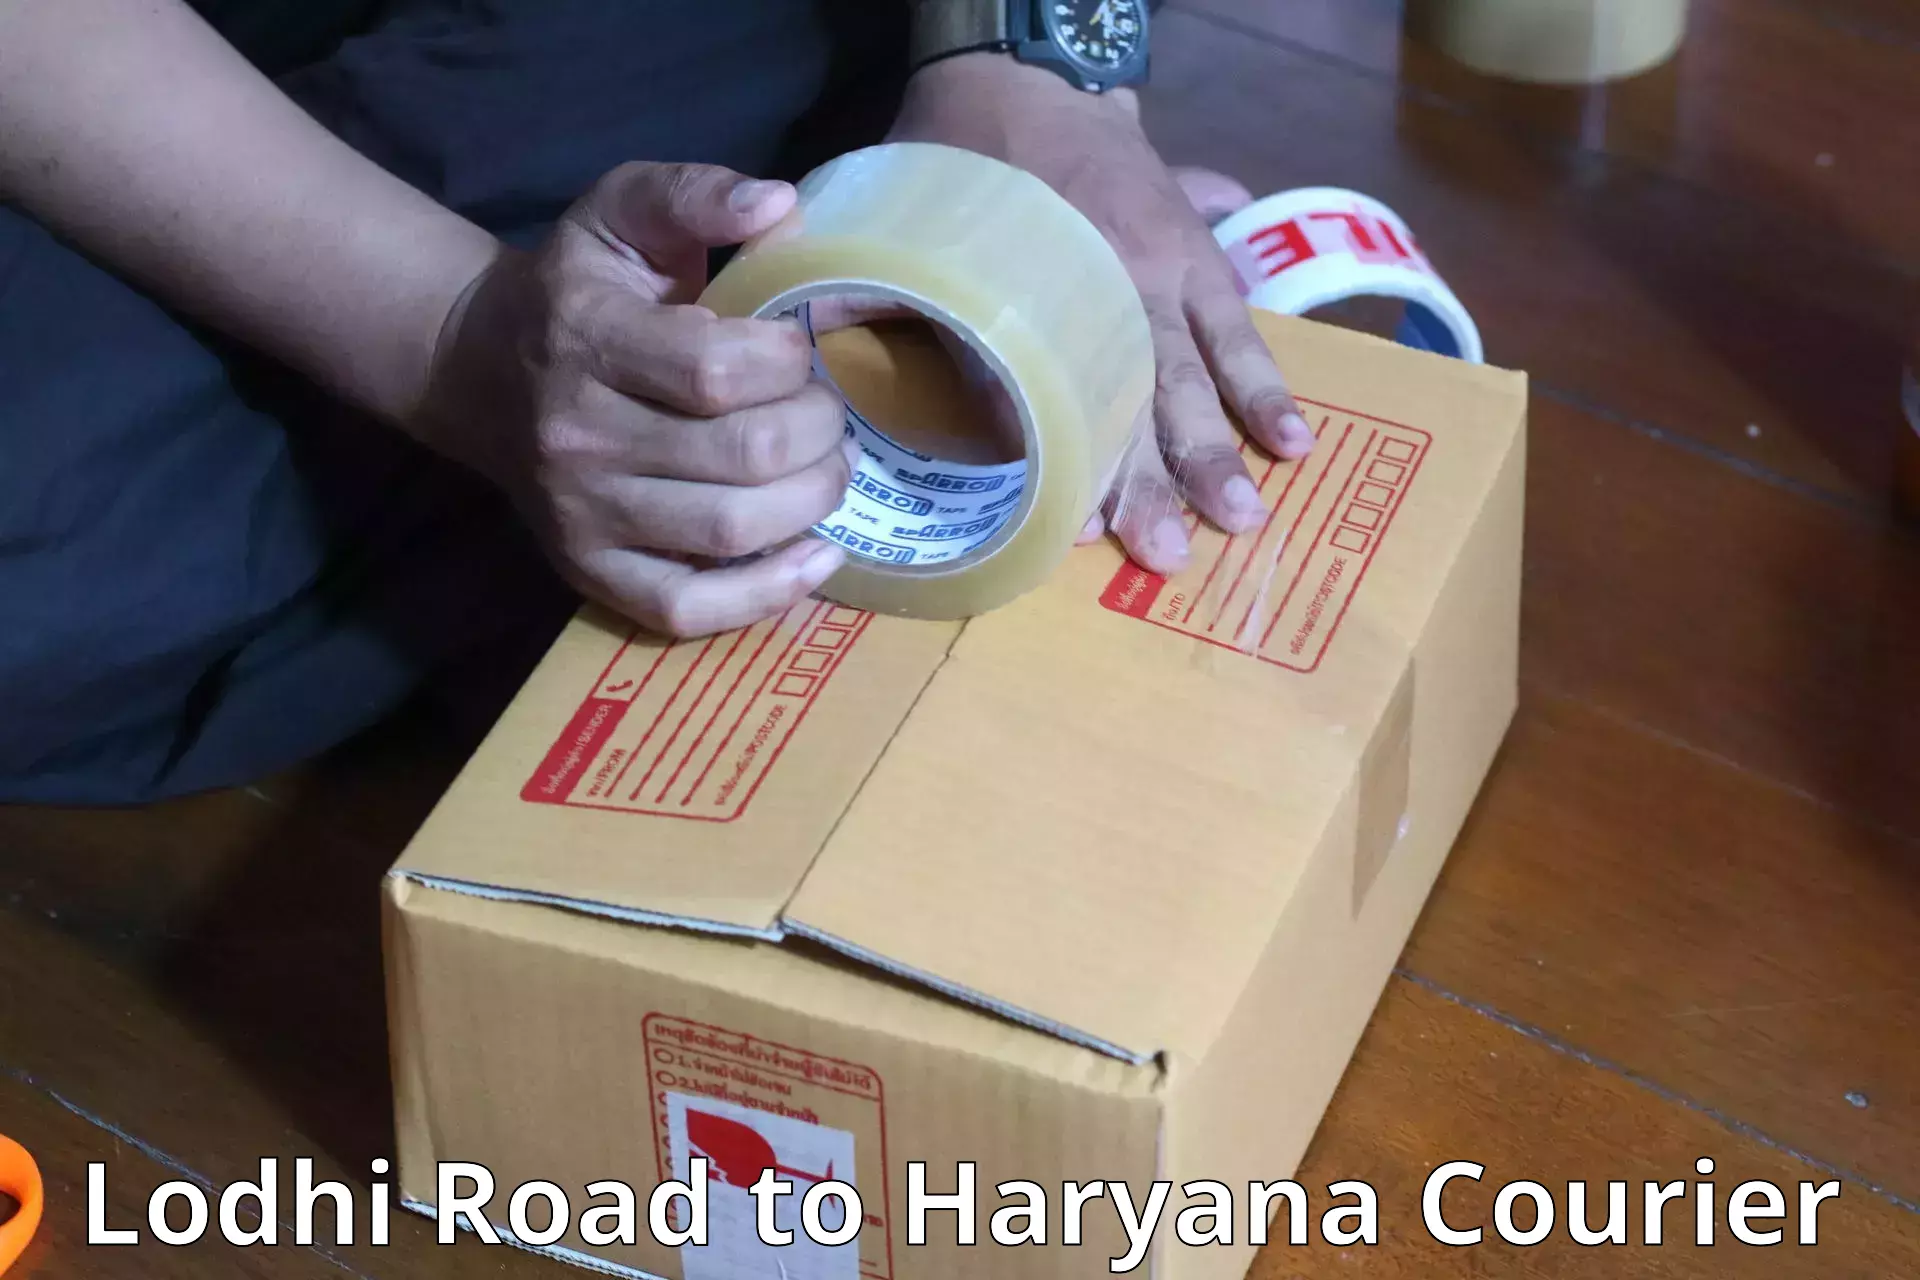 Luggage transport company Lodhi Road to Haryana